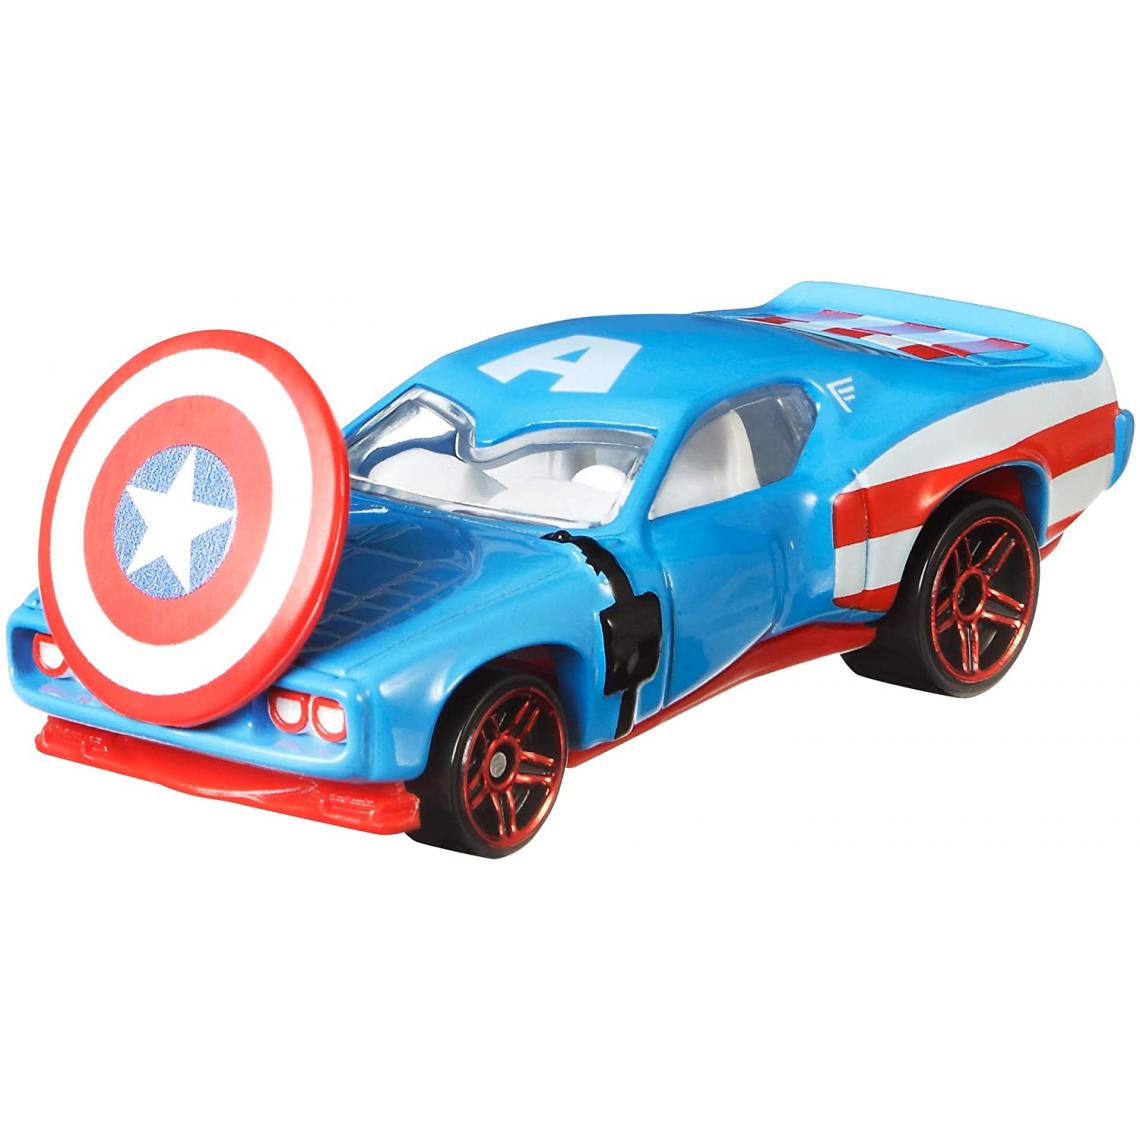 Hot Wheels - véhicule Marvel Character Cars Captain America - Voiture de collection miniature